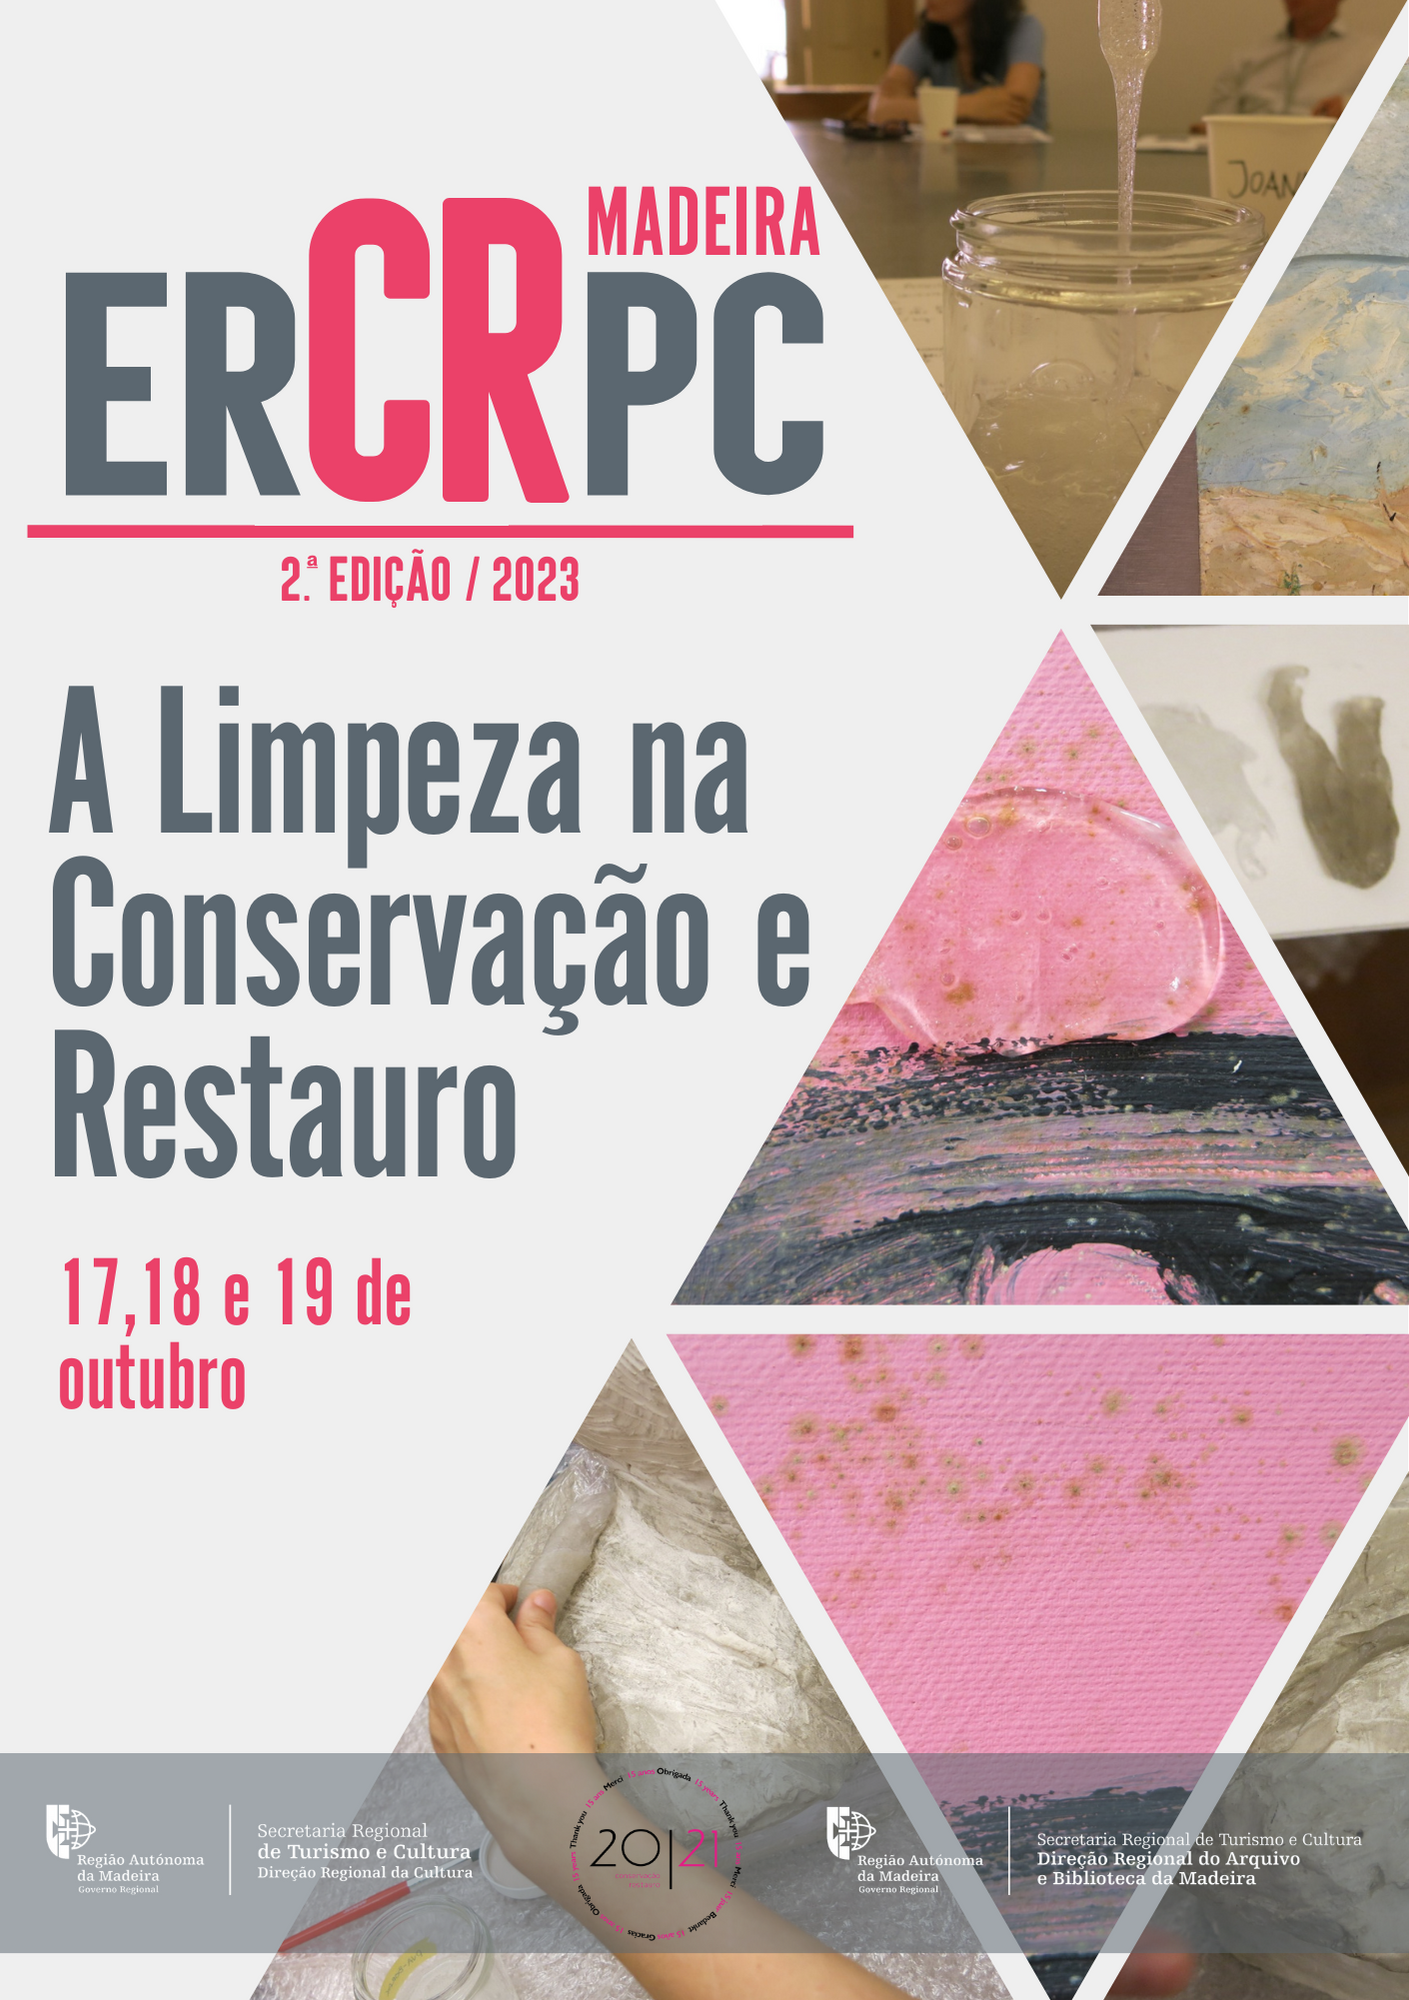 Cartel ERCRPC 2023